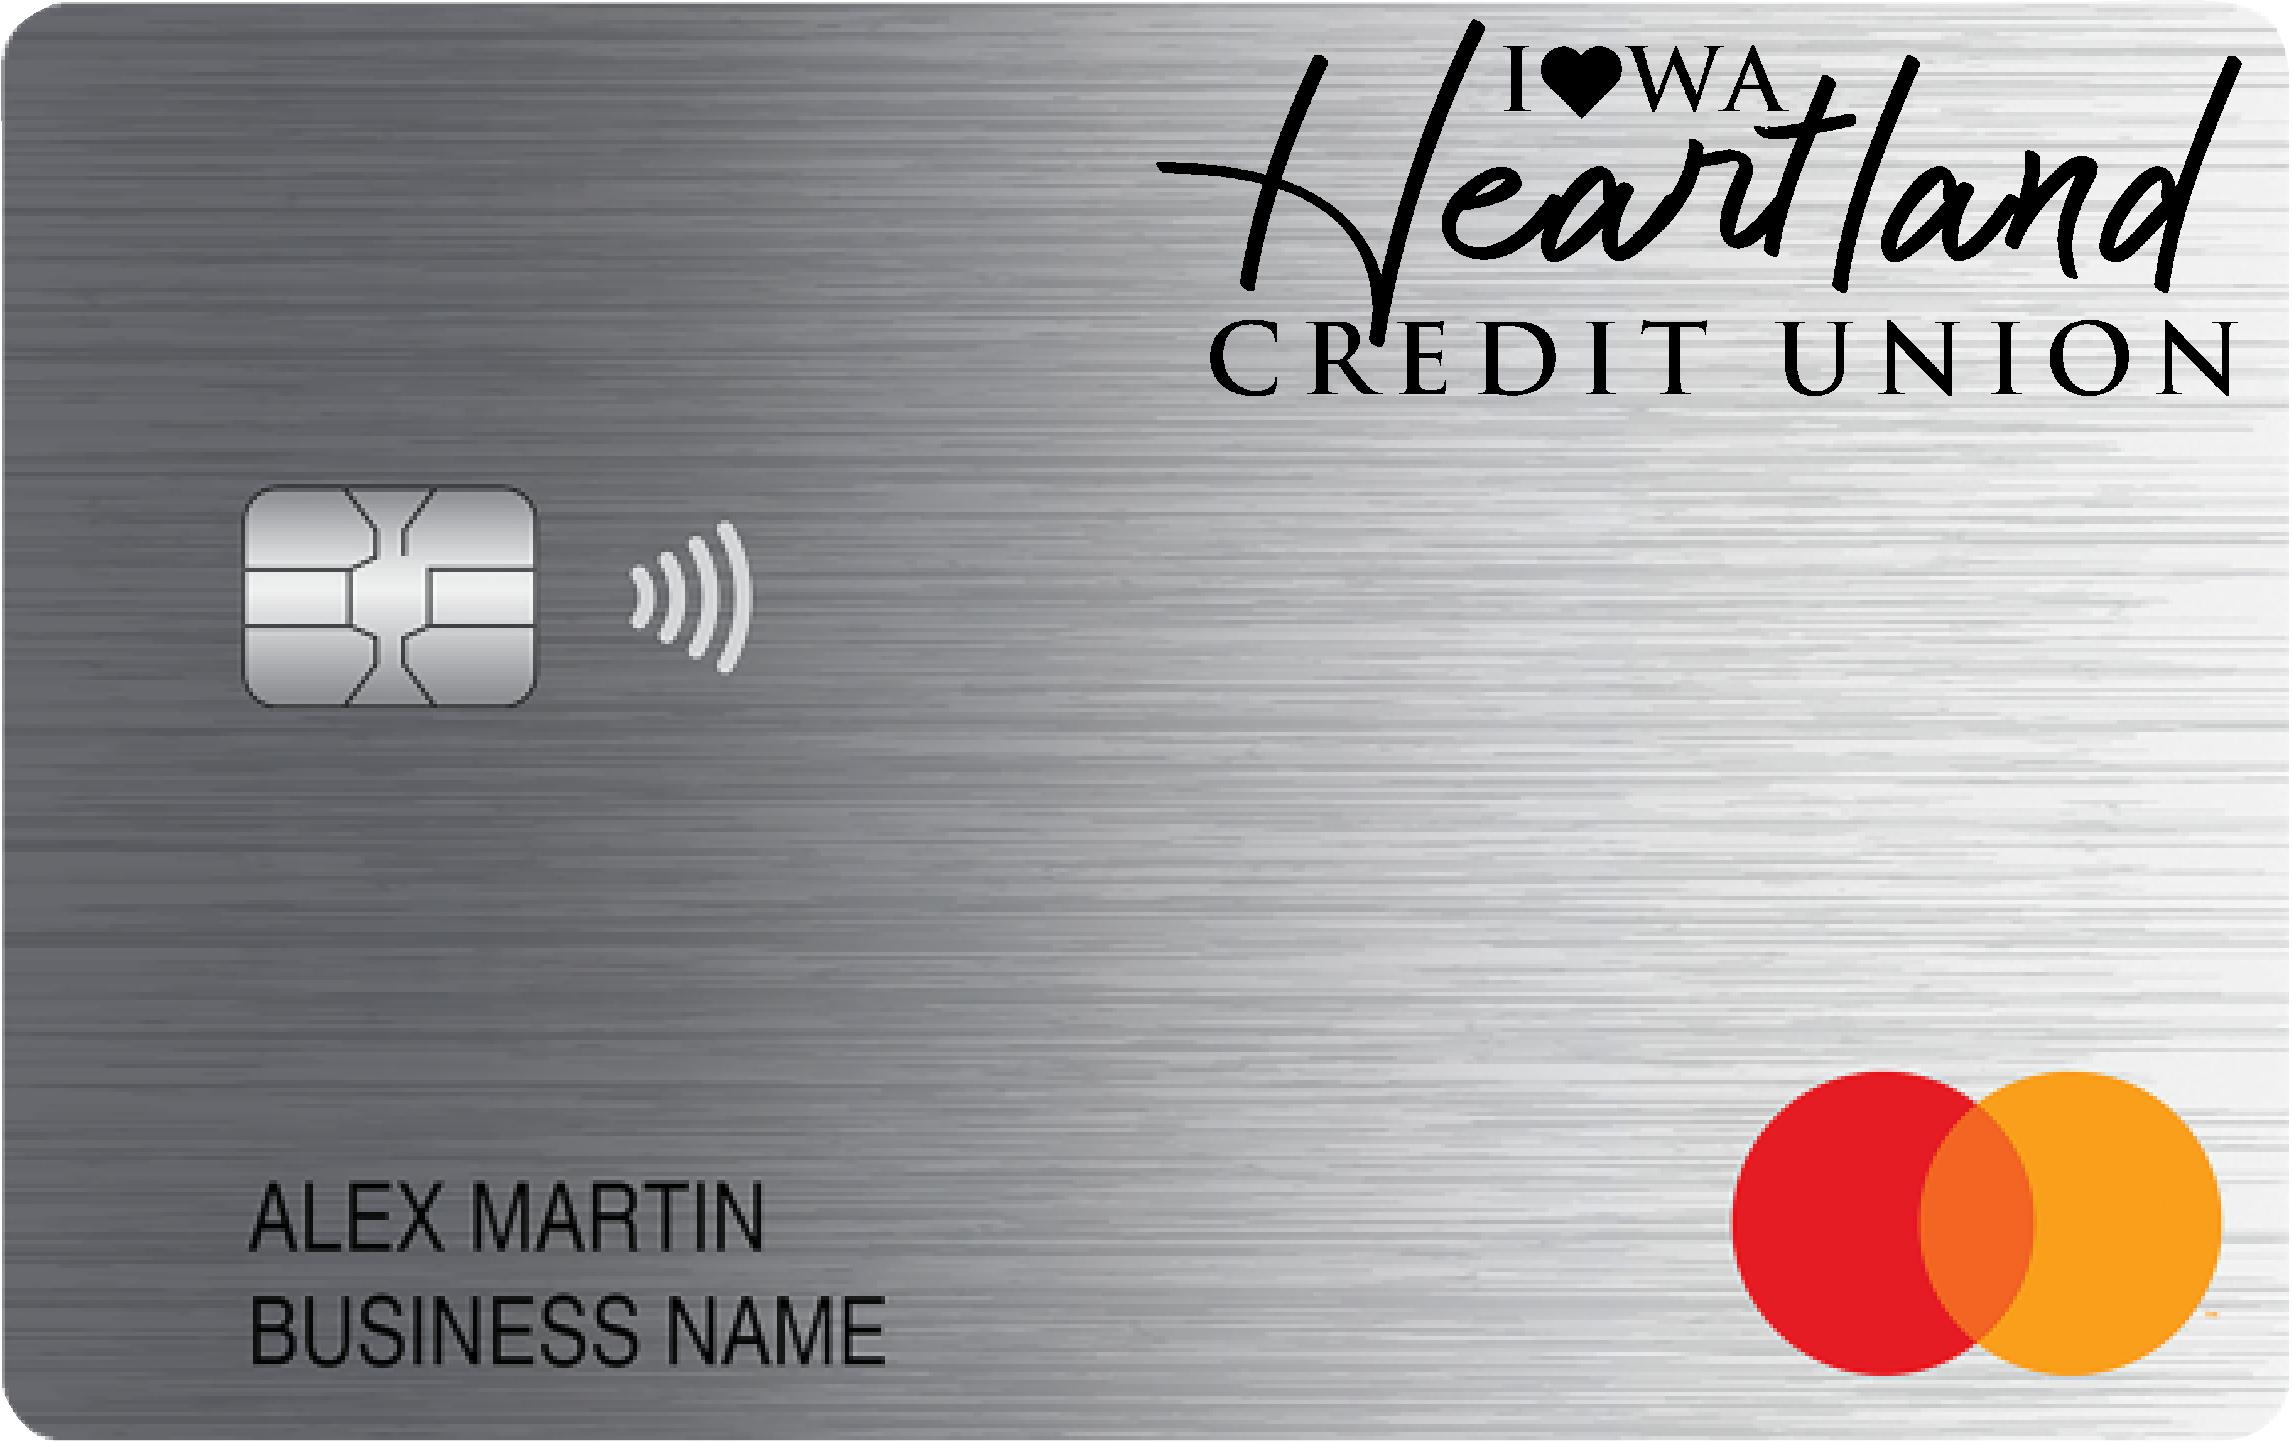 Iowa Heartland Credit Union Smart Business Rewards Card